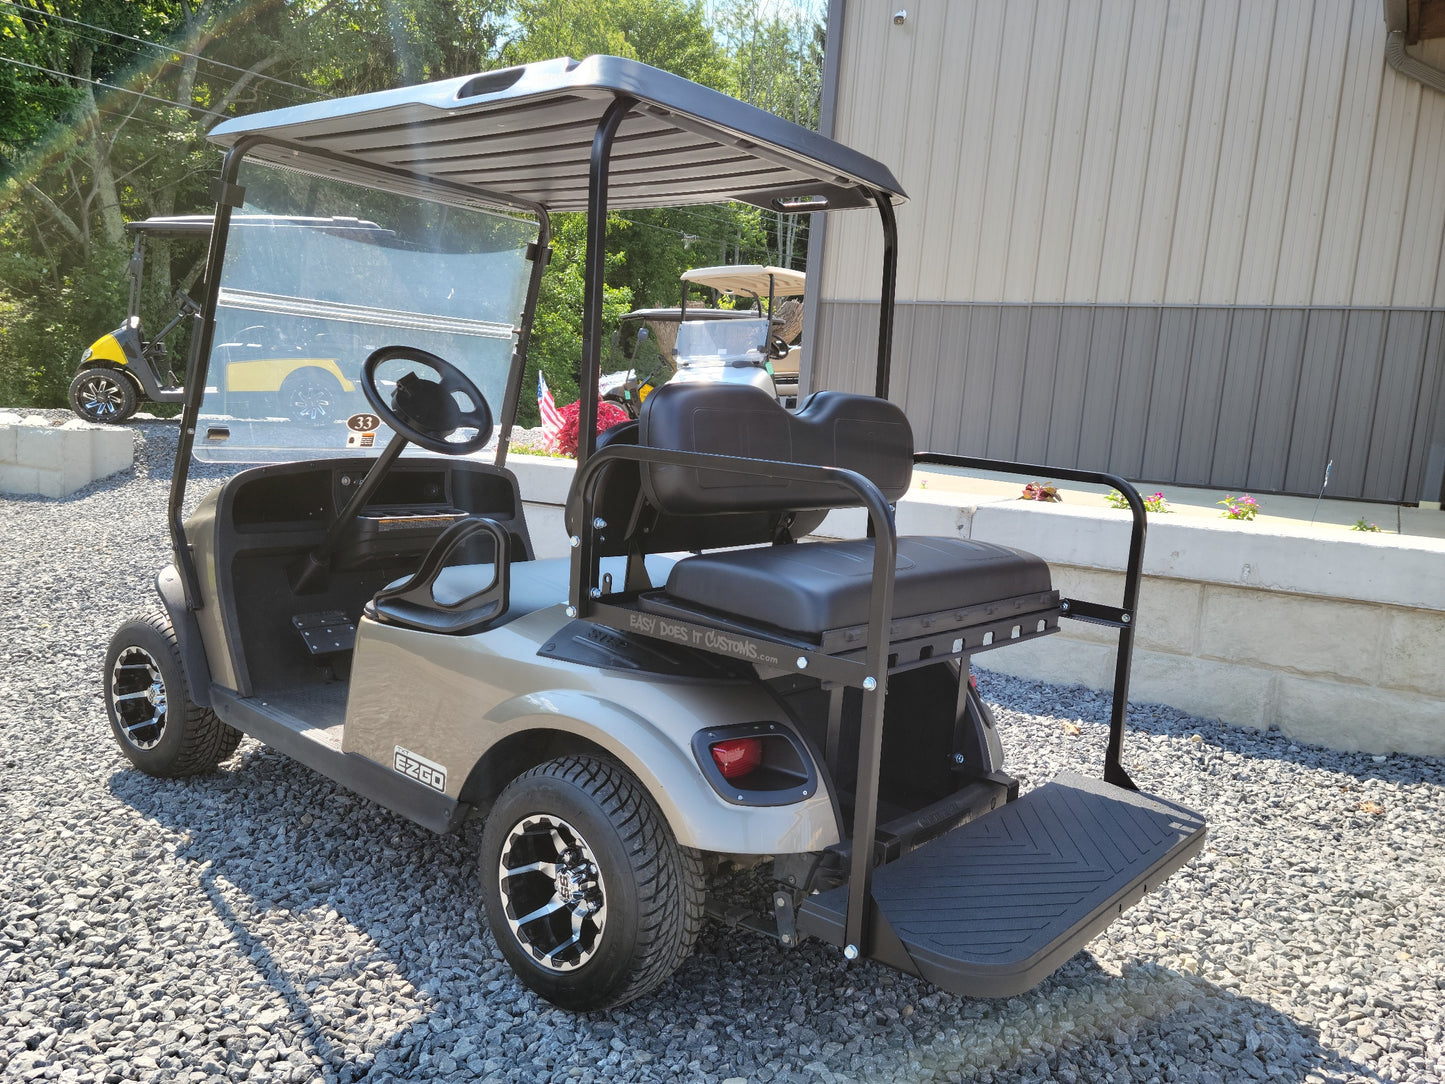 2018 Gas EZGO TXT Golf Cart - Almond with Custom Wheels *SOLD*